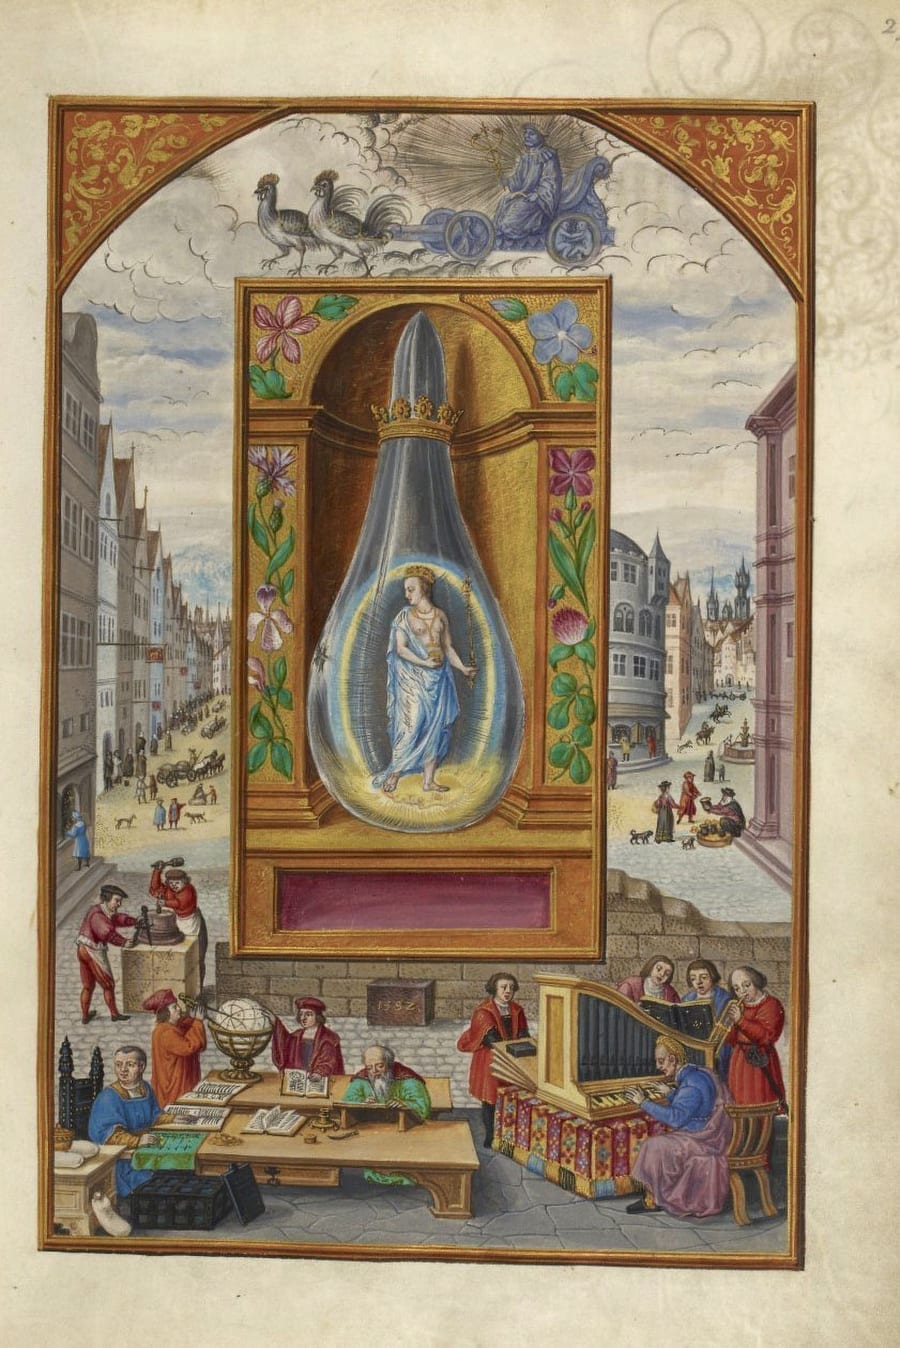 Illustration of a queen from the Alchemical manuscript Splendor Solis